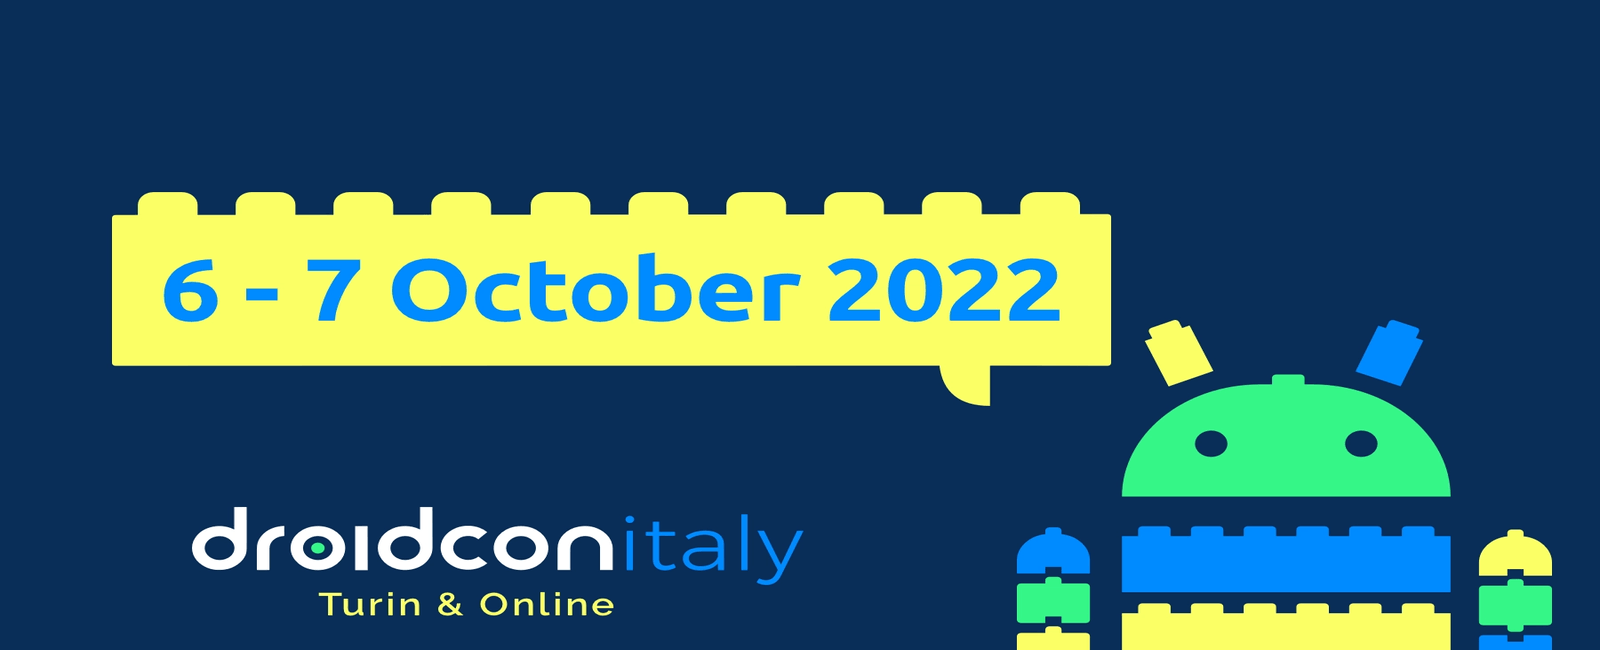 Meet me at droidcon Italy 2022